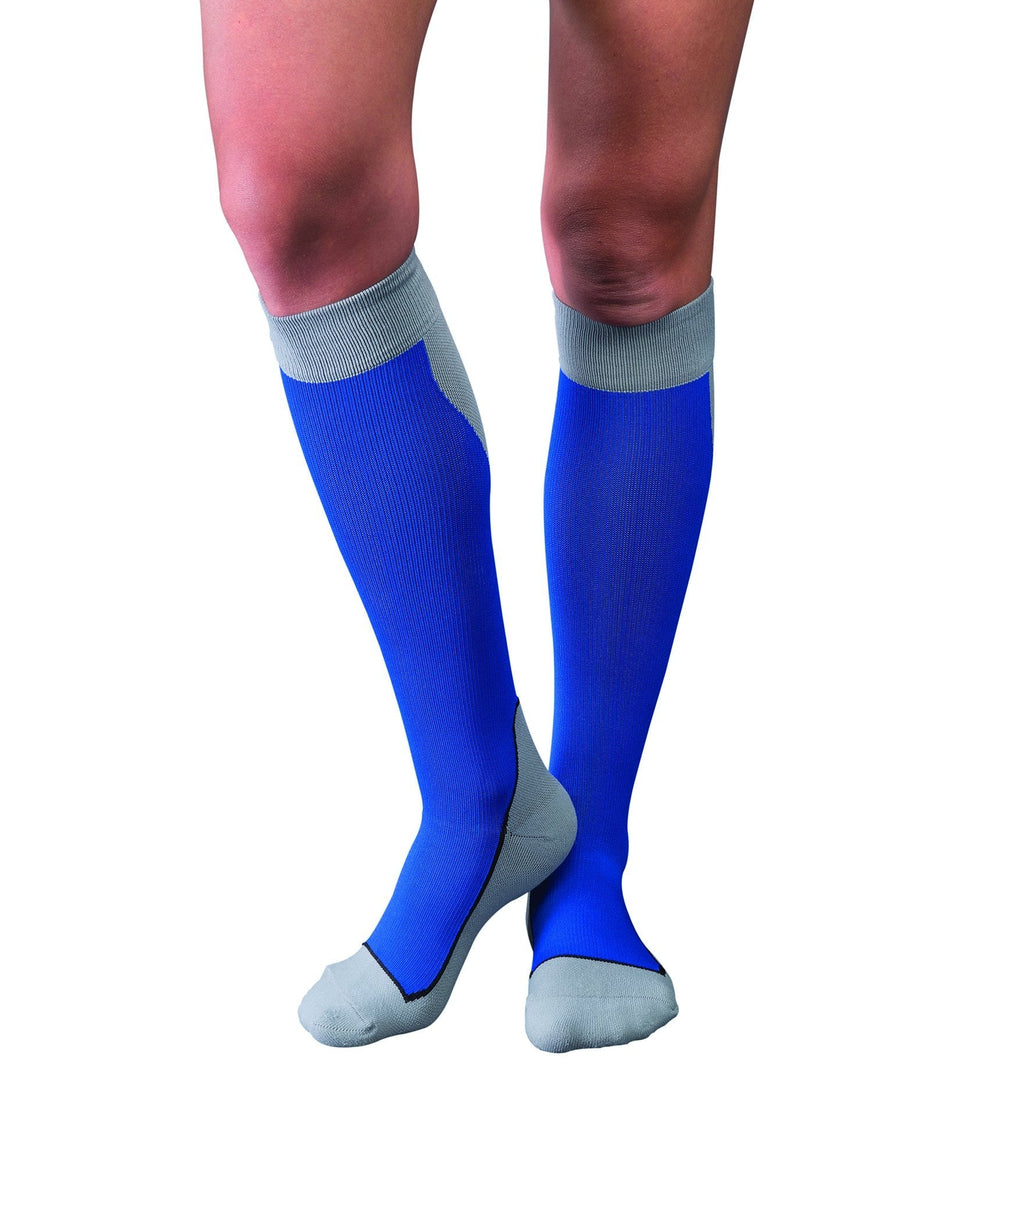 [Australia] - JOBST Sport Knee High 15-20 mmHg Compression Socks, Royal Blue/Grey, Large 